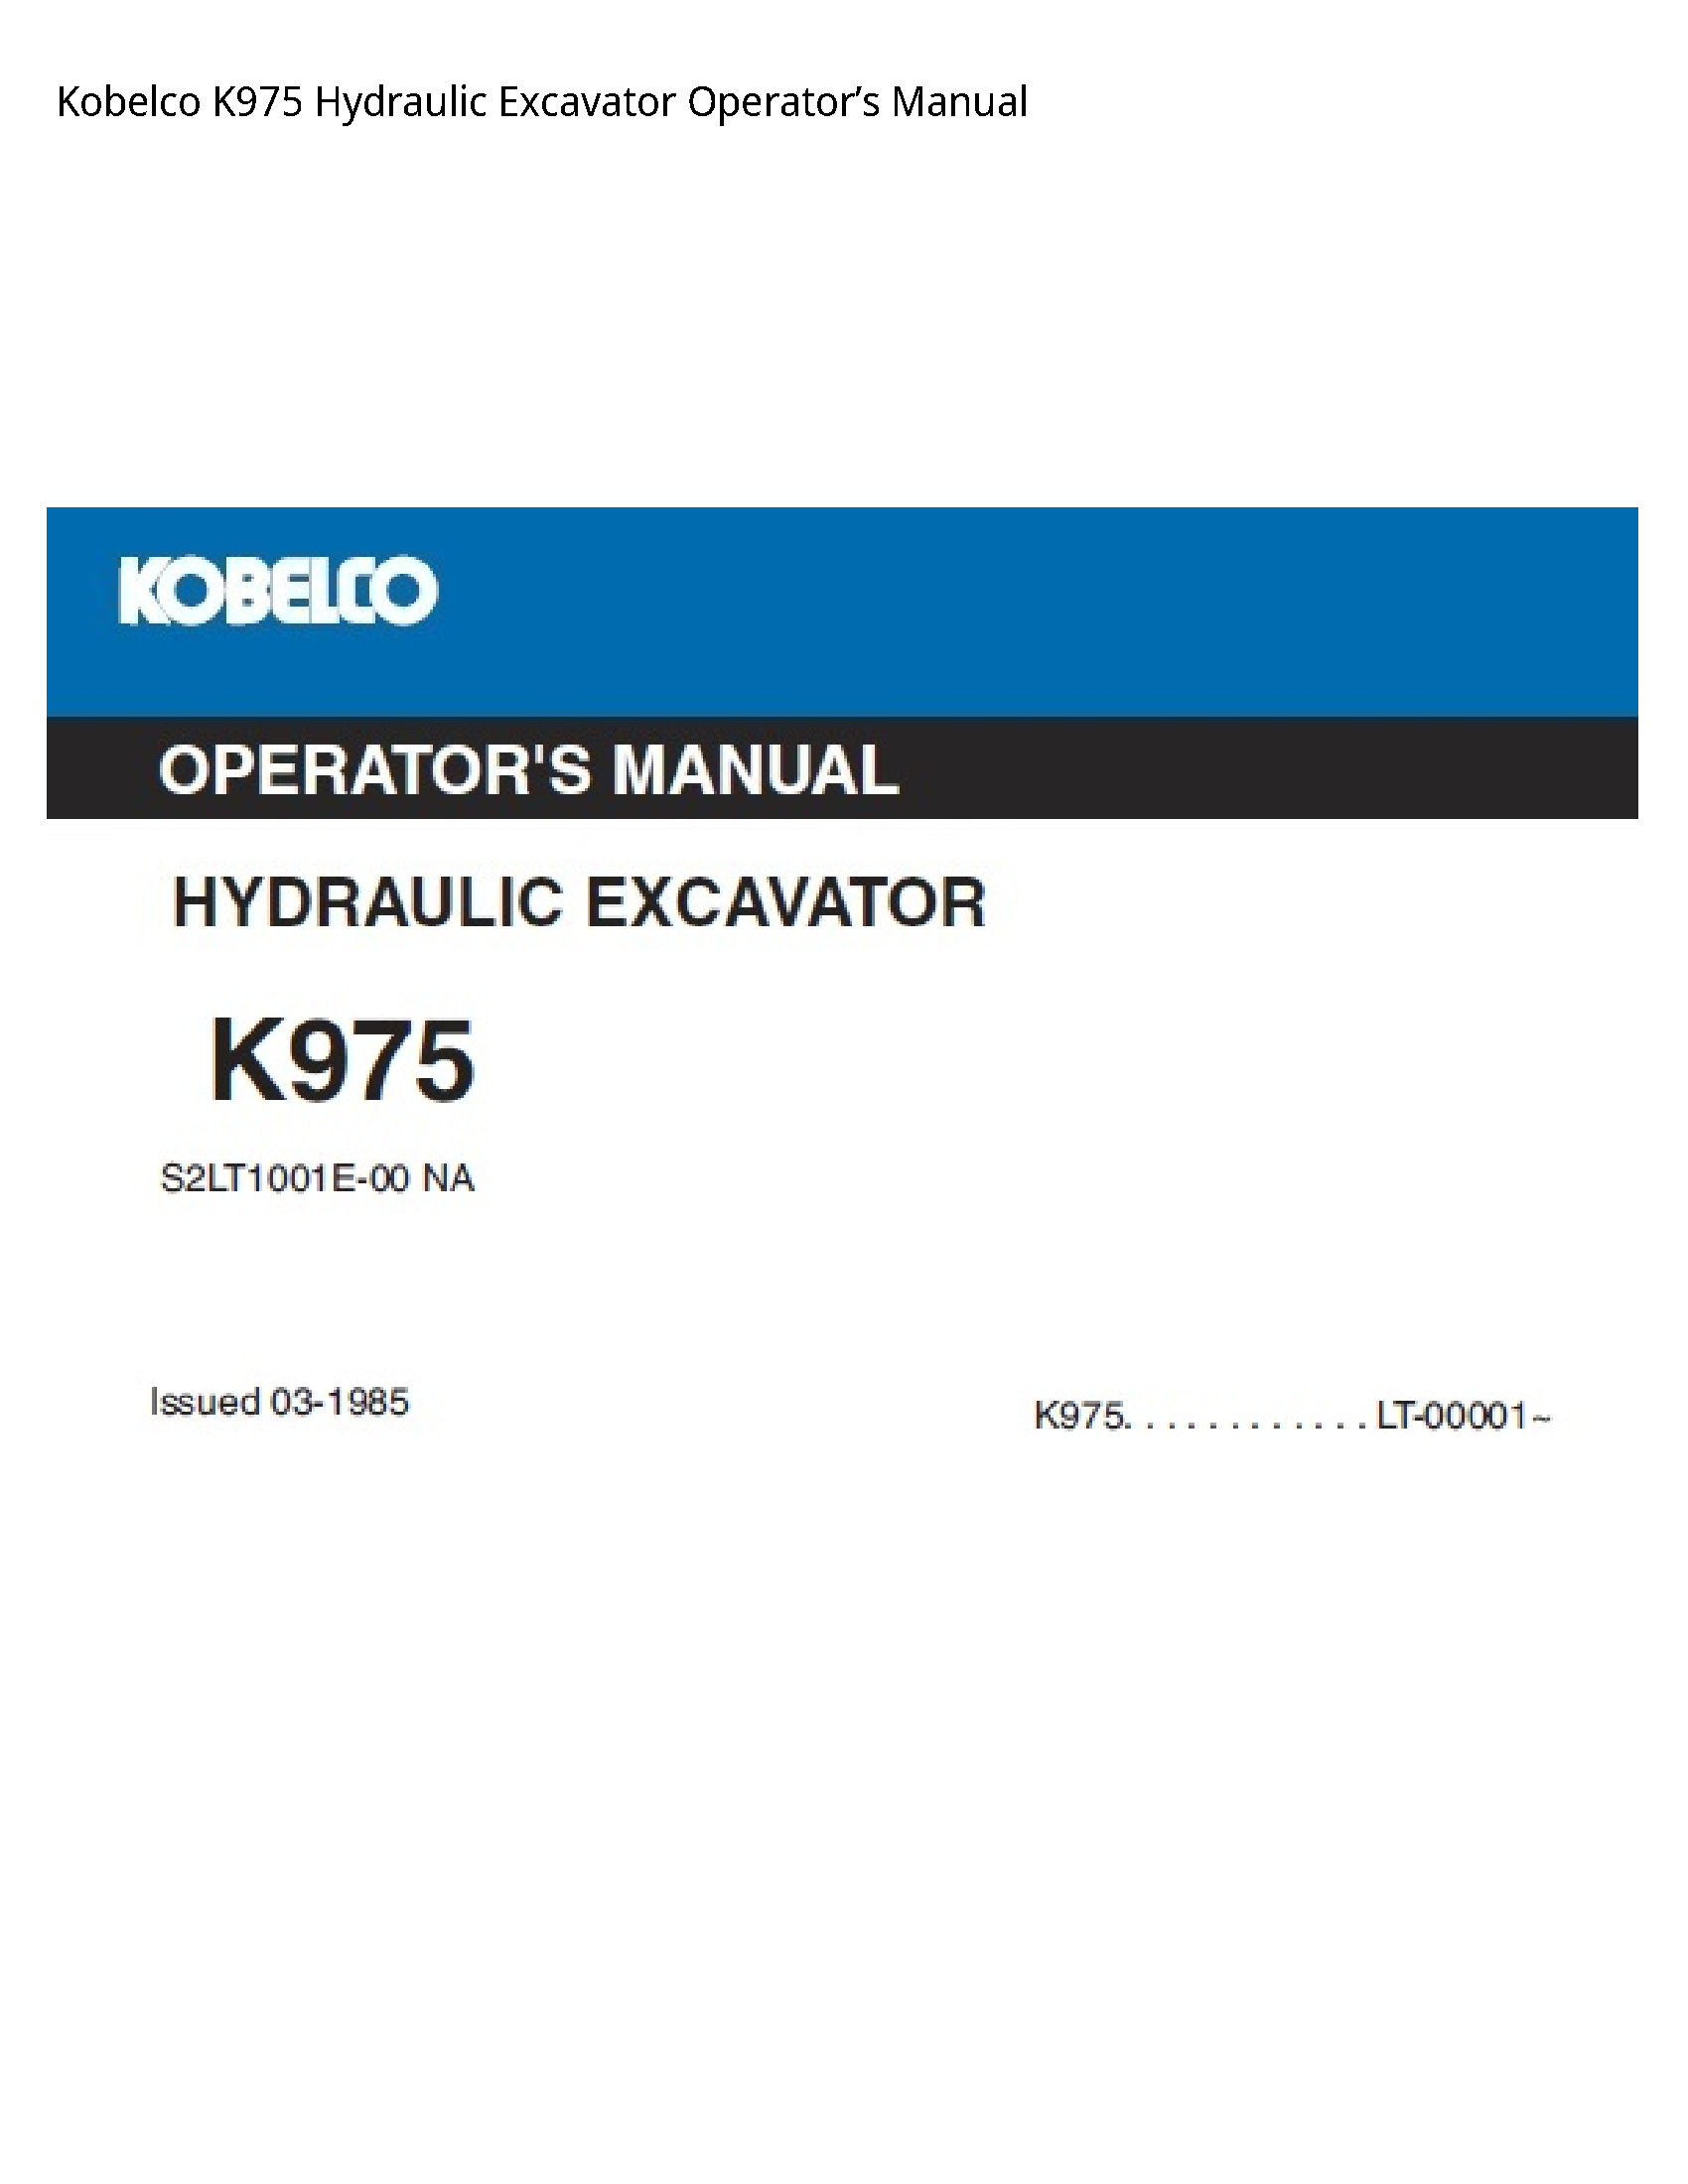 Kobelco K975 Hydraulic Excavator Operator’s manual